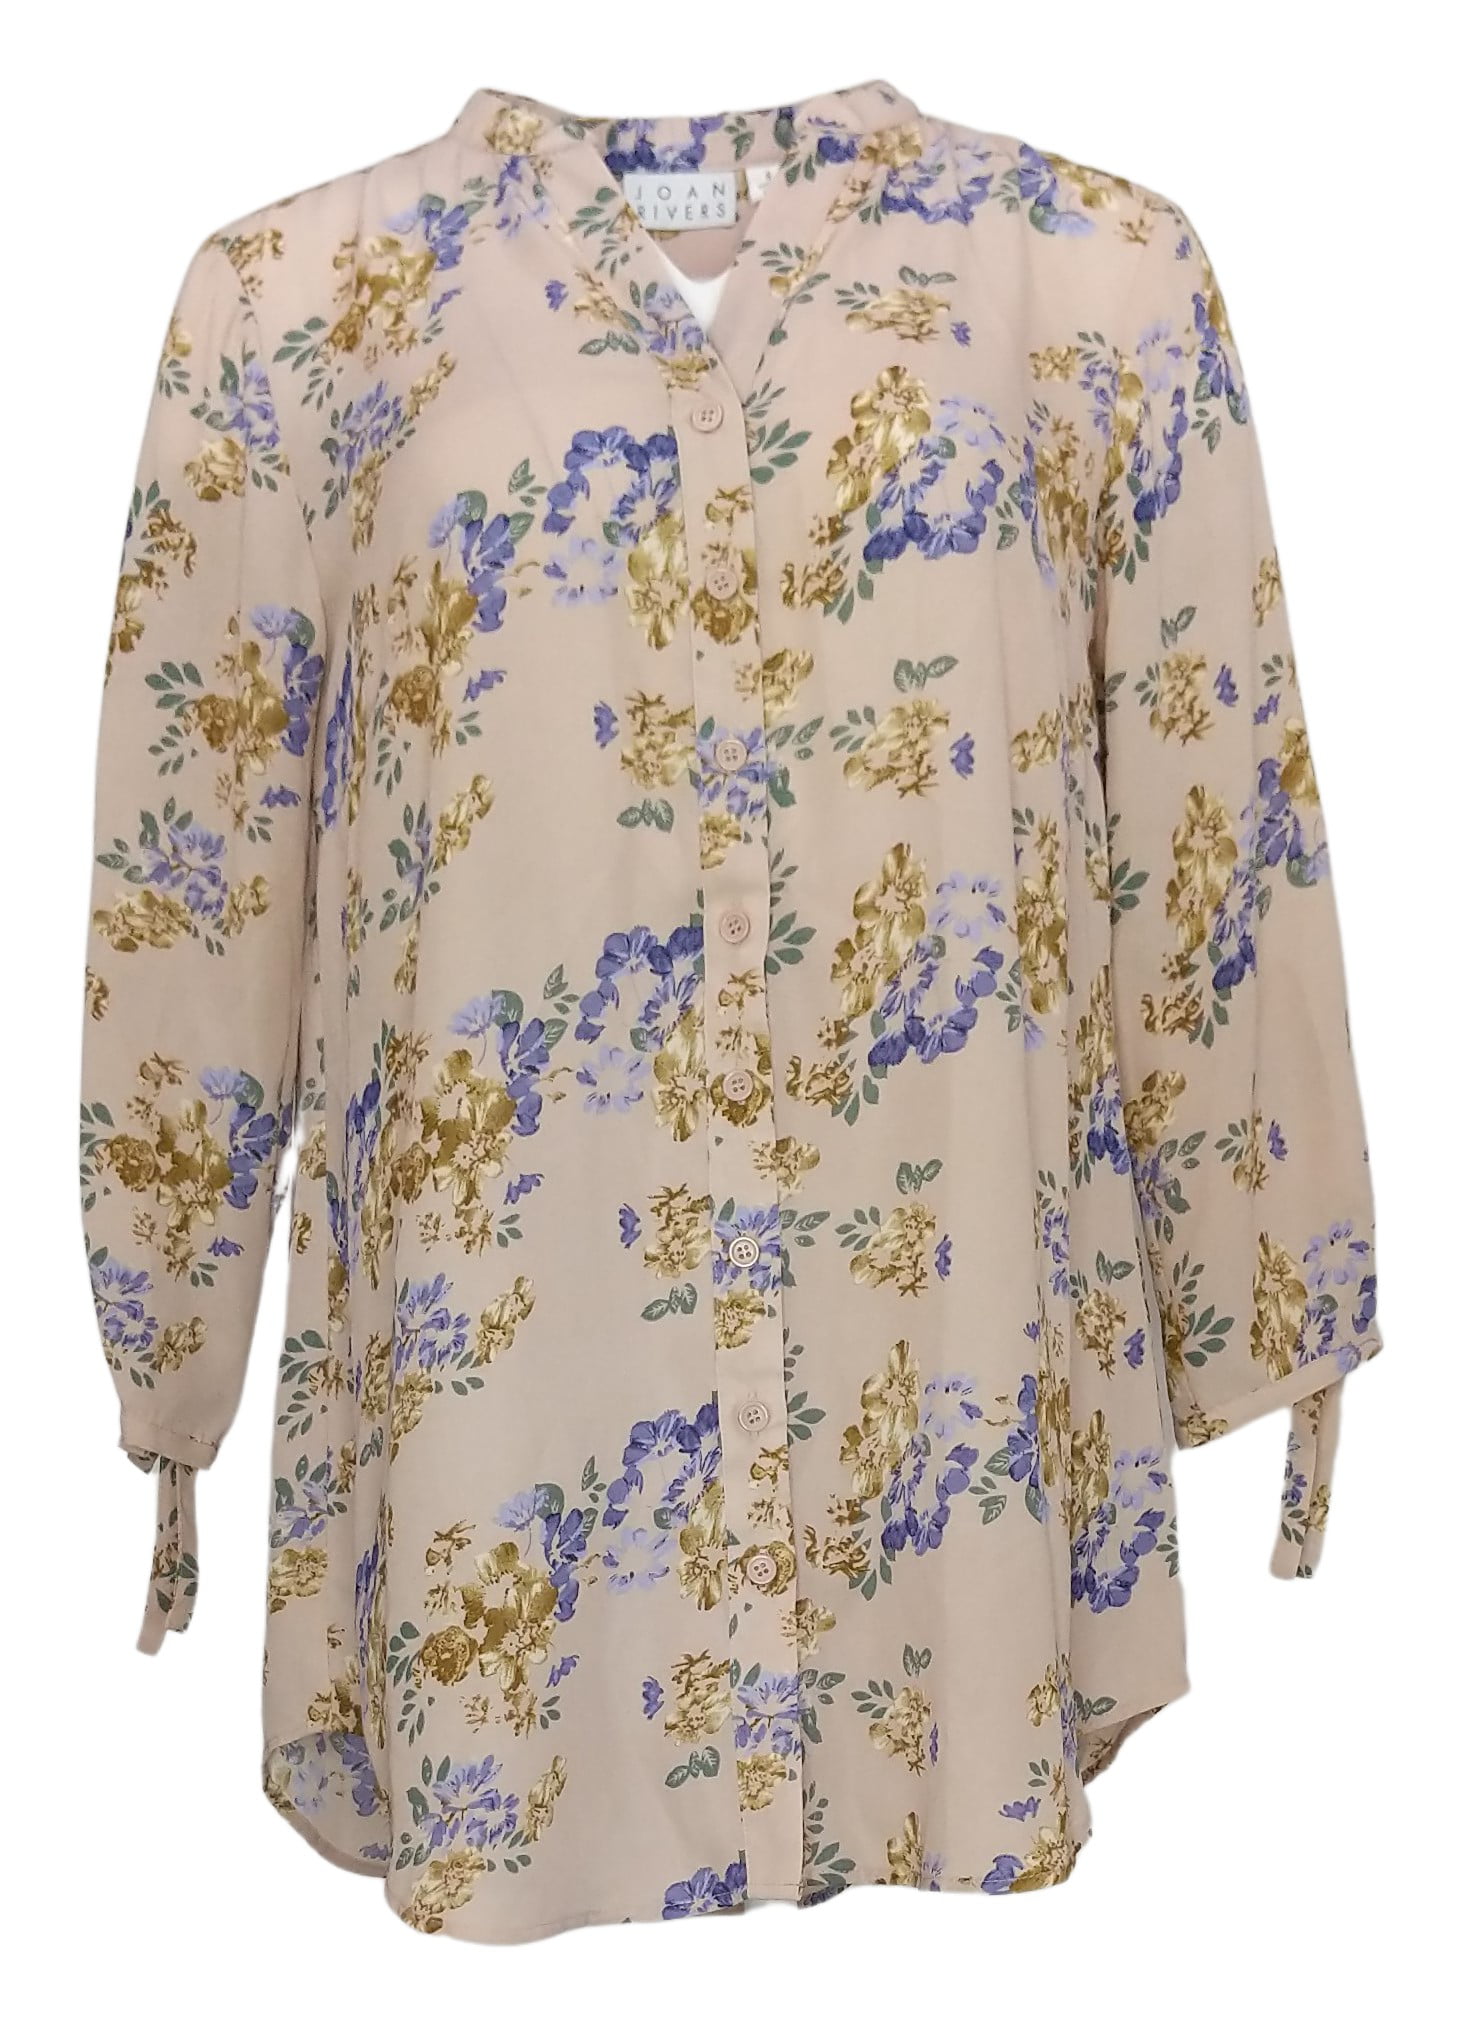 Joan Rivers Classics Collection Women's Top Sz 8 Floral Tunic Beige ...